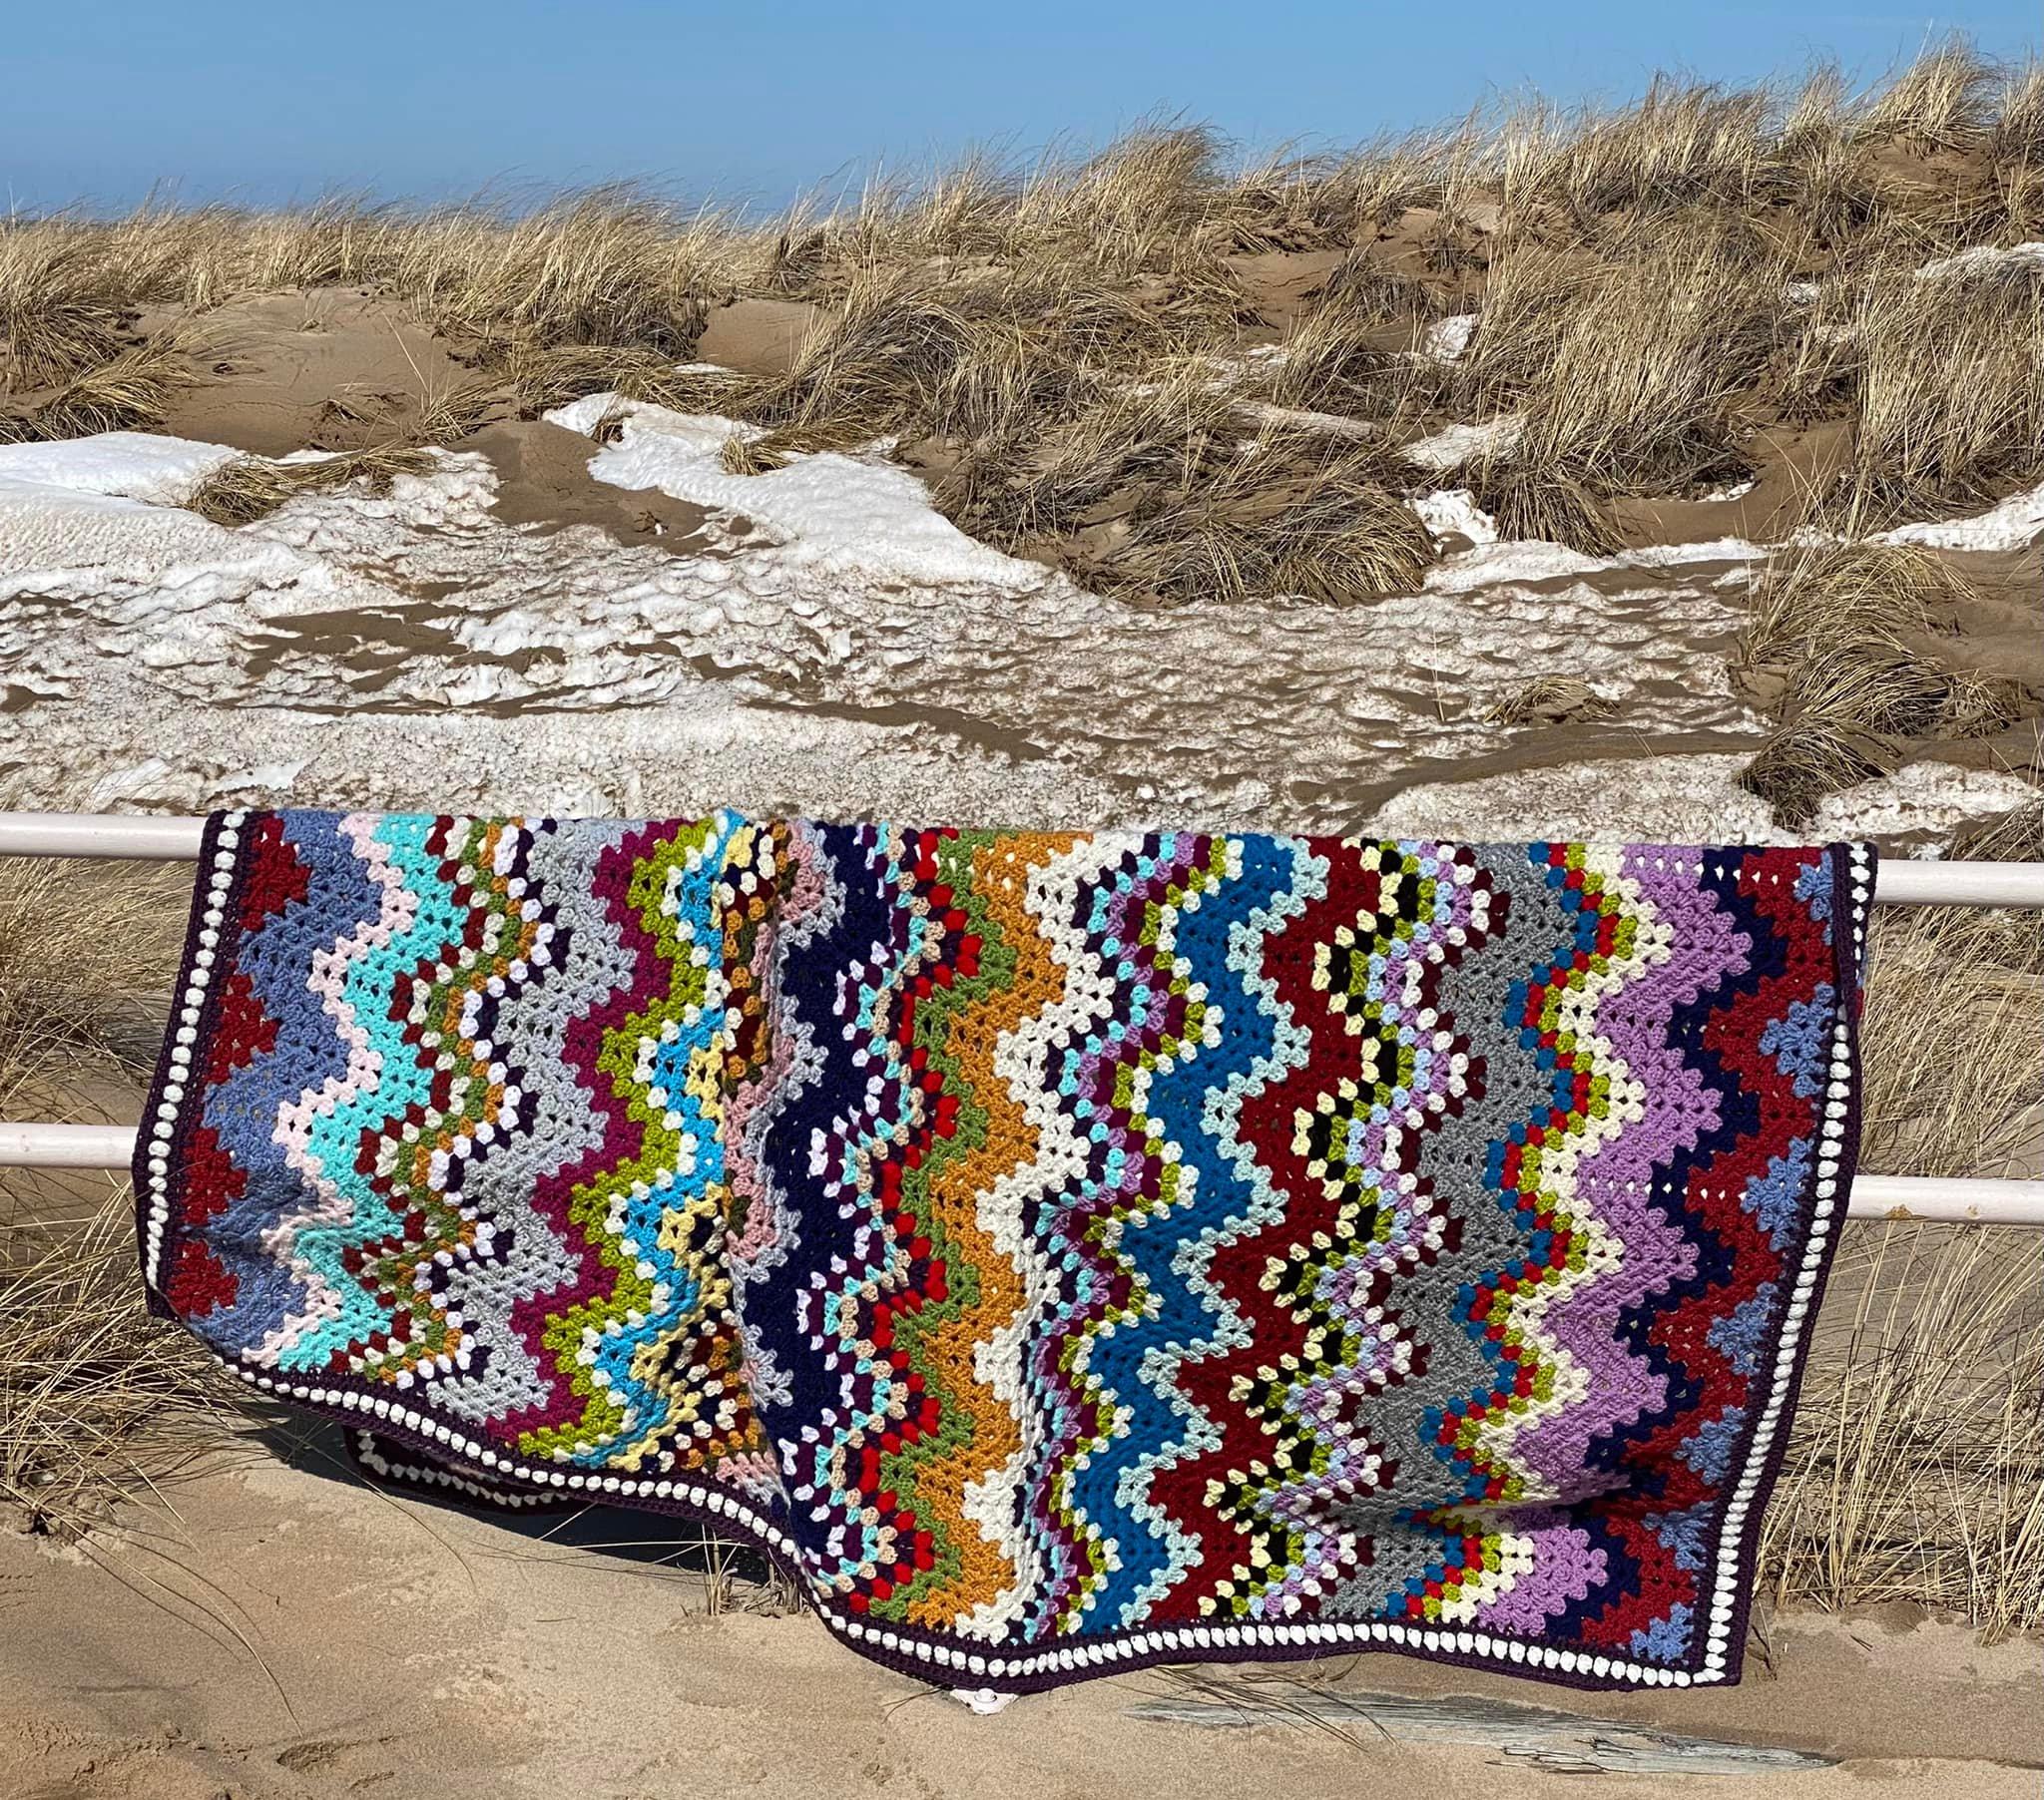 HOW TO MAKE A CROCHET BAG STRAP // Ophelia Talks Crochet 